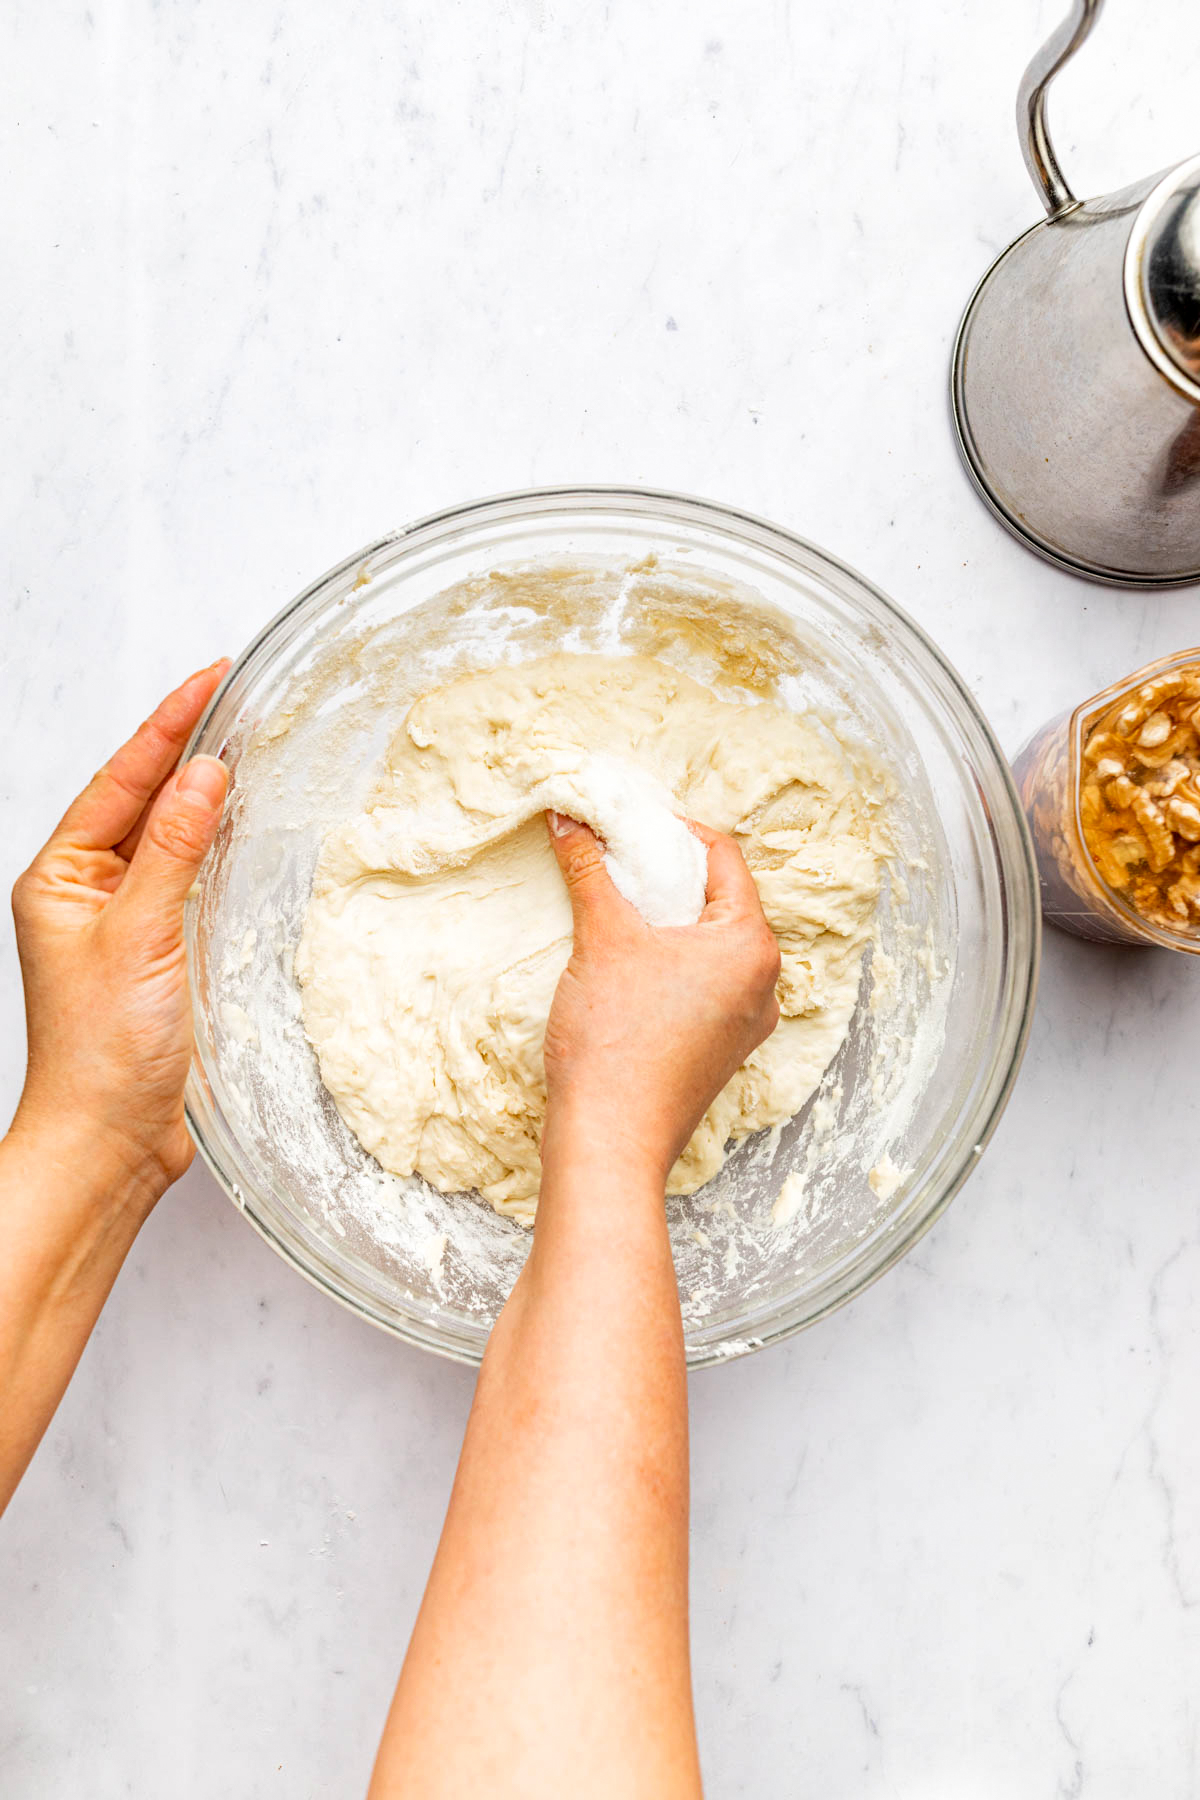 A hand reaching into a bowl of dough.